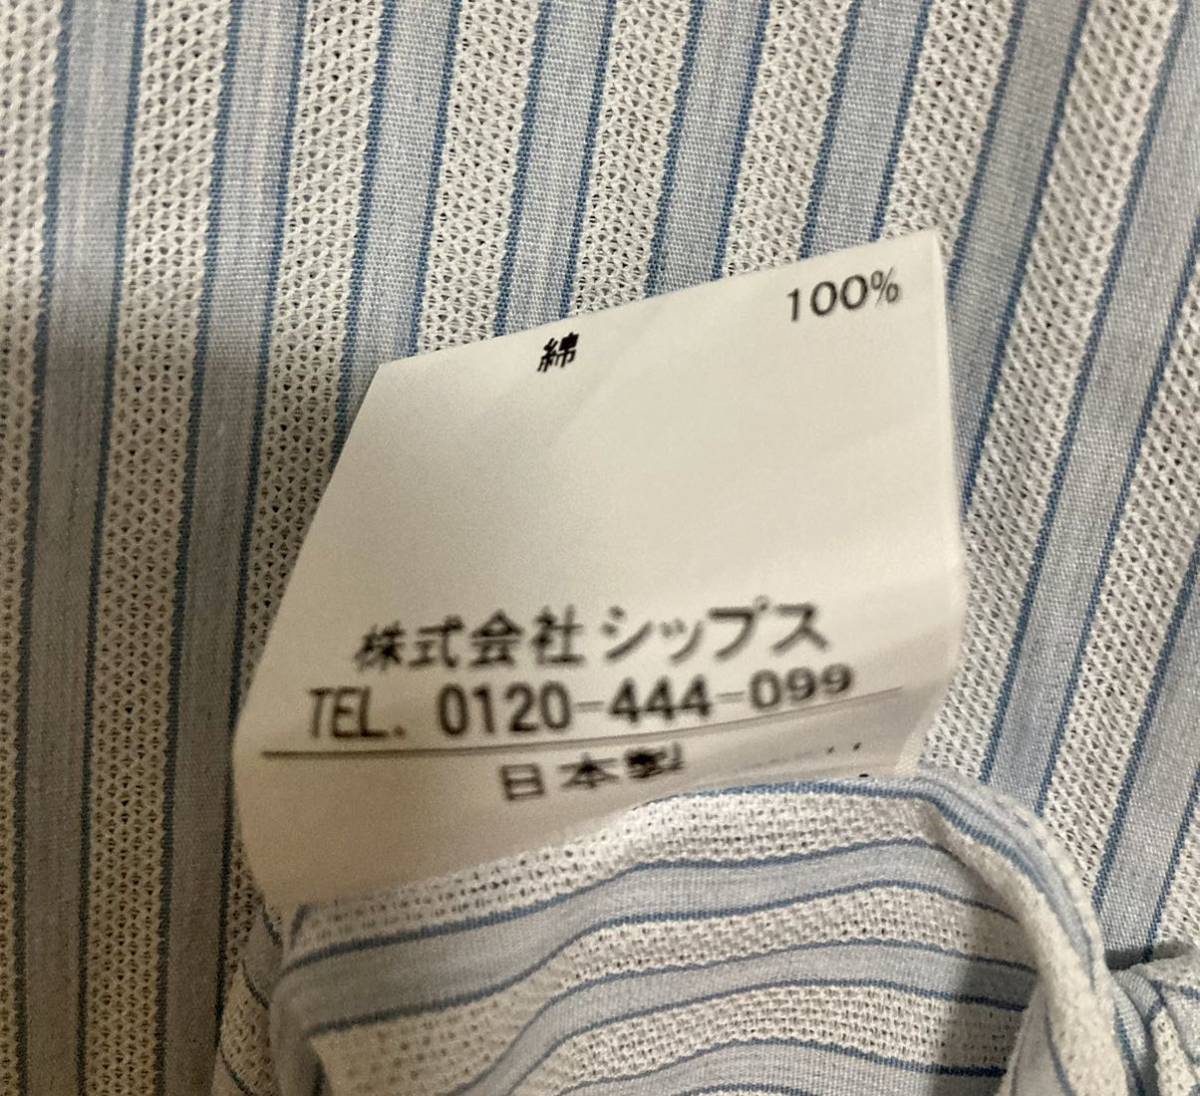 [SHIPS] made in Japan long sleeve shirt size37 TESSITURA MONTI made in japan stripe shirt Ships select tesi toe la* monte .